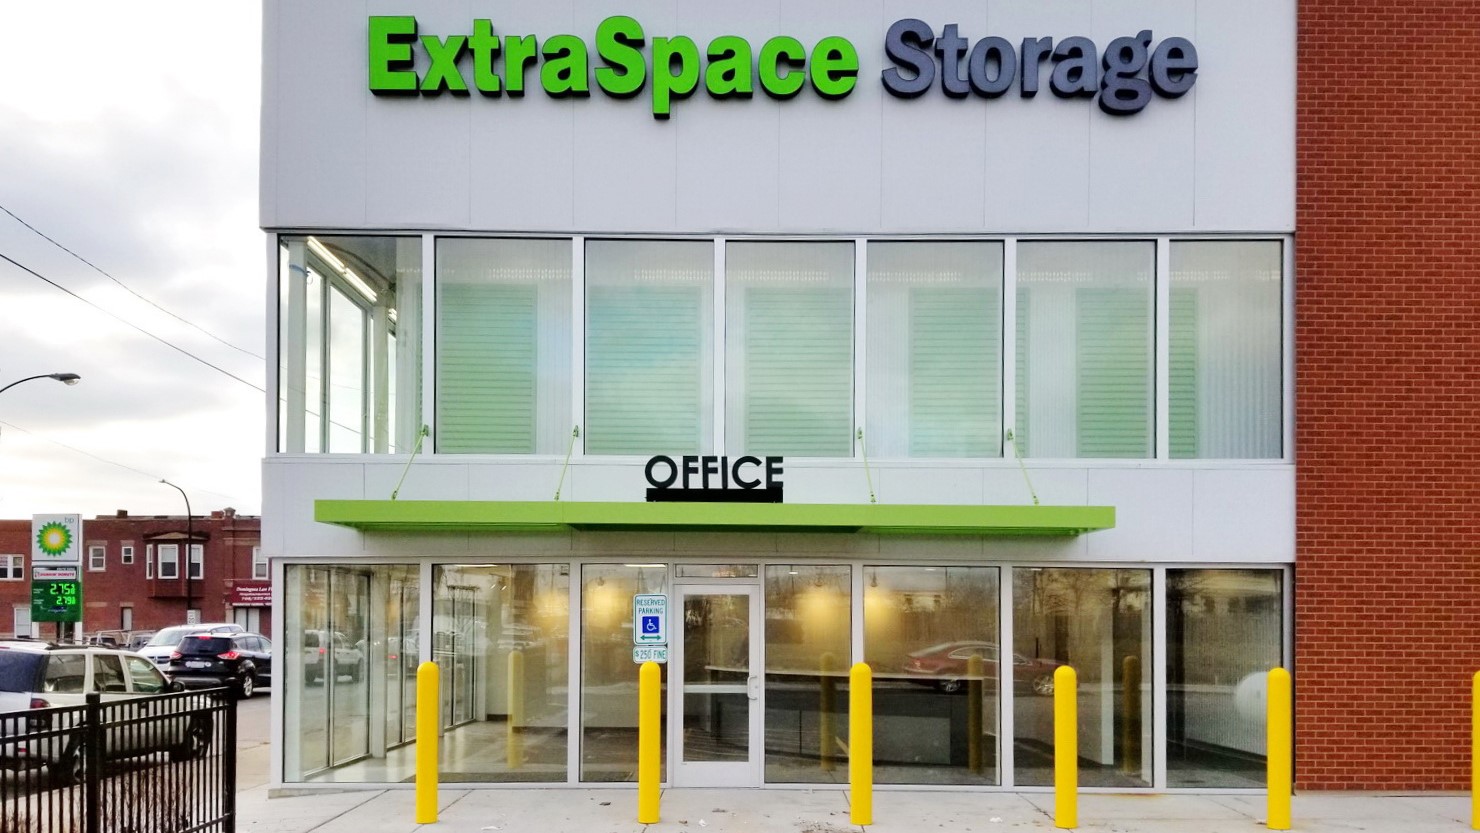 ExtraSpace Storage, Chicago, IL